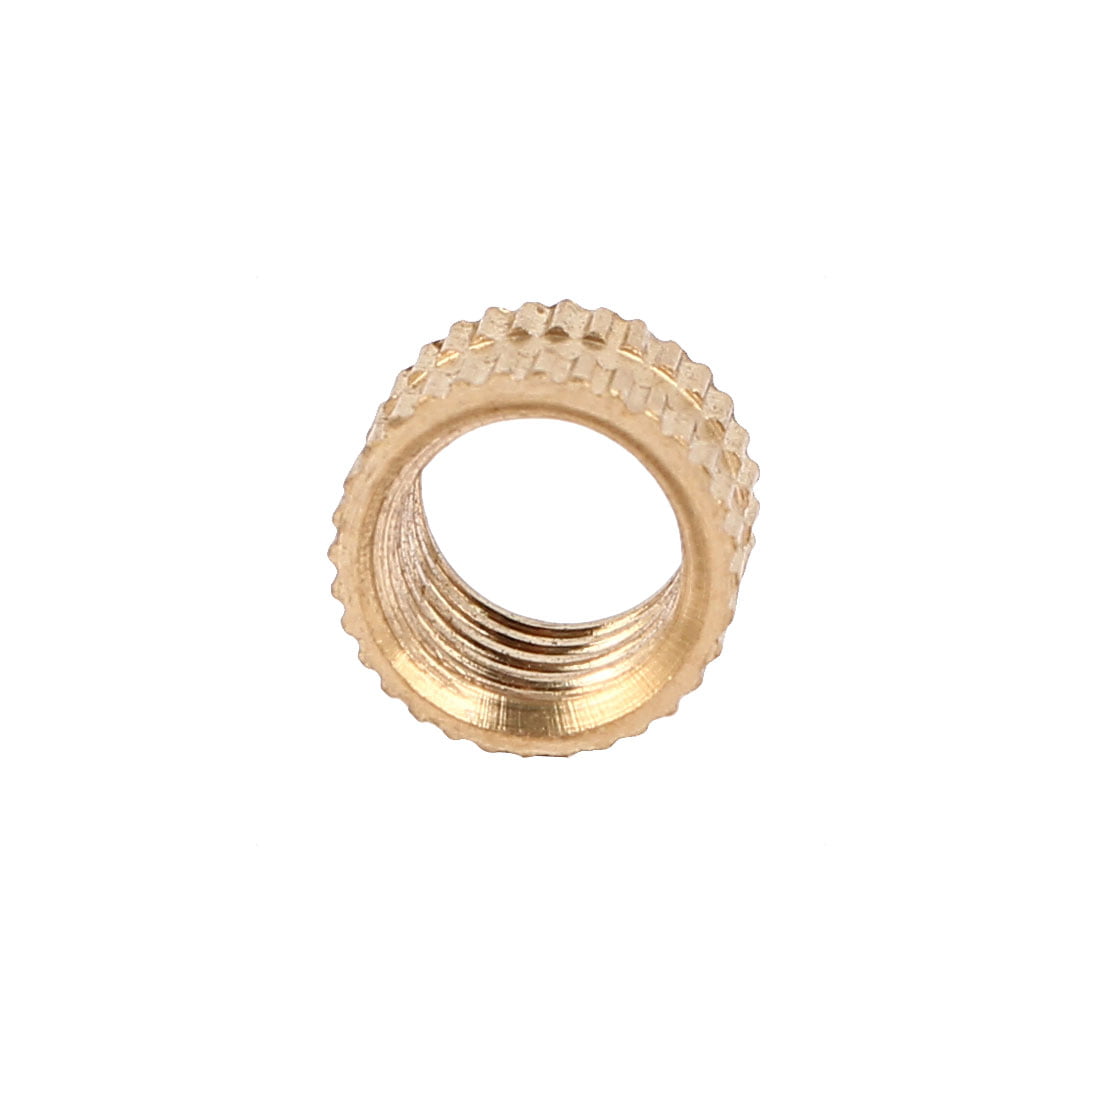 M8 x 6mm Female Thread Brass Knurled Threaded Round Insert Embedded Nuts 100PCS 